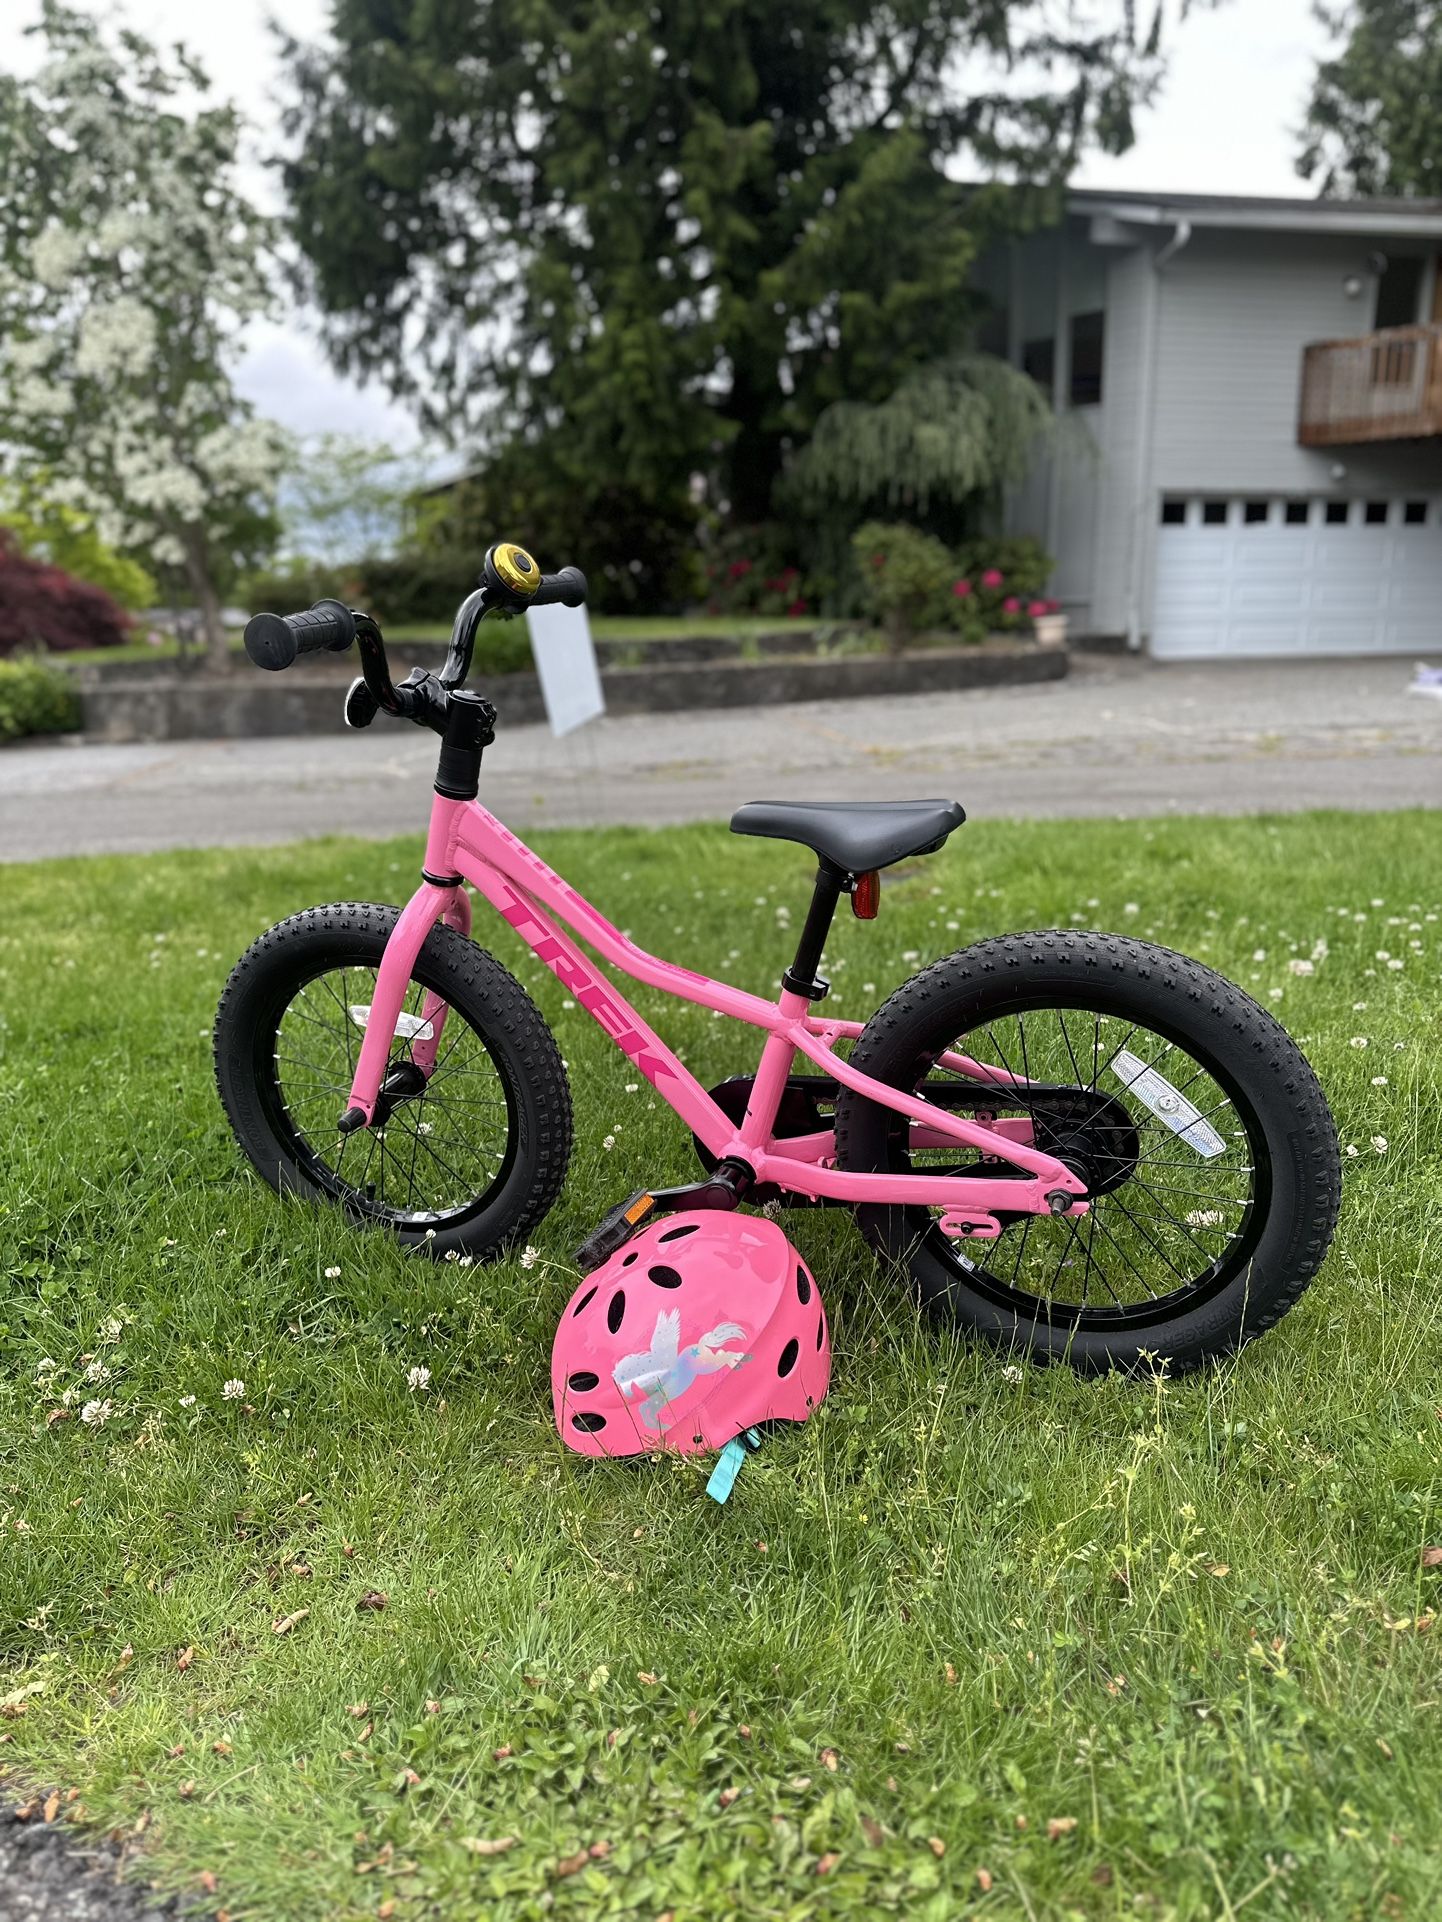 Trek Precaliber Kids Bike 16” with Helmet